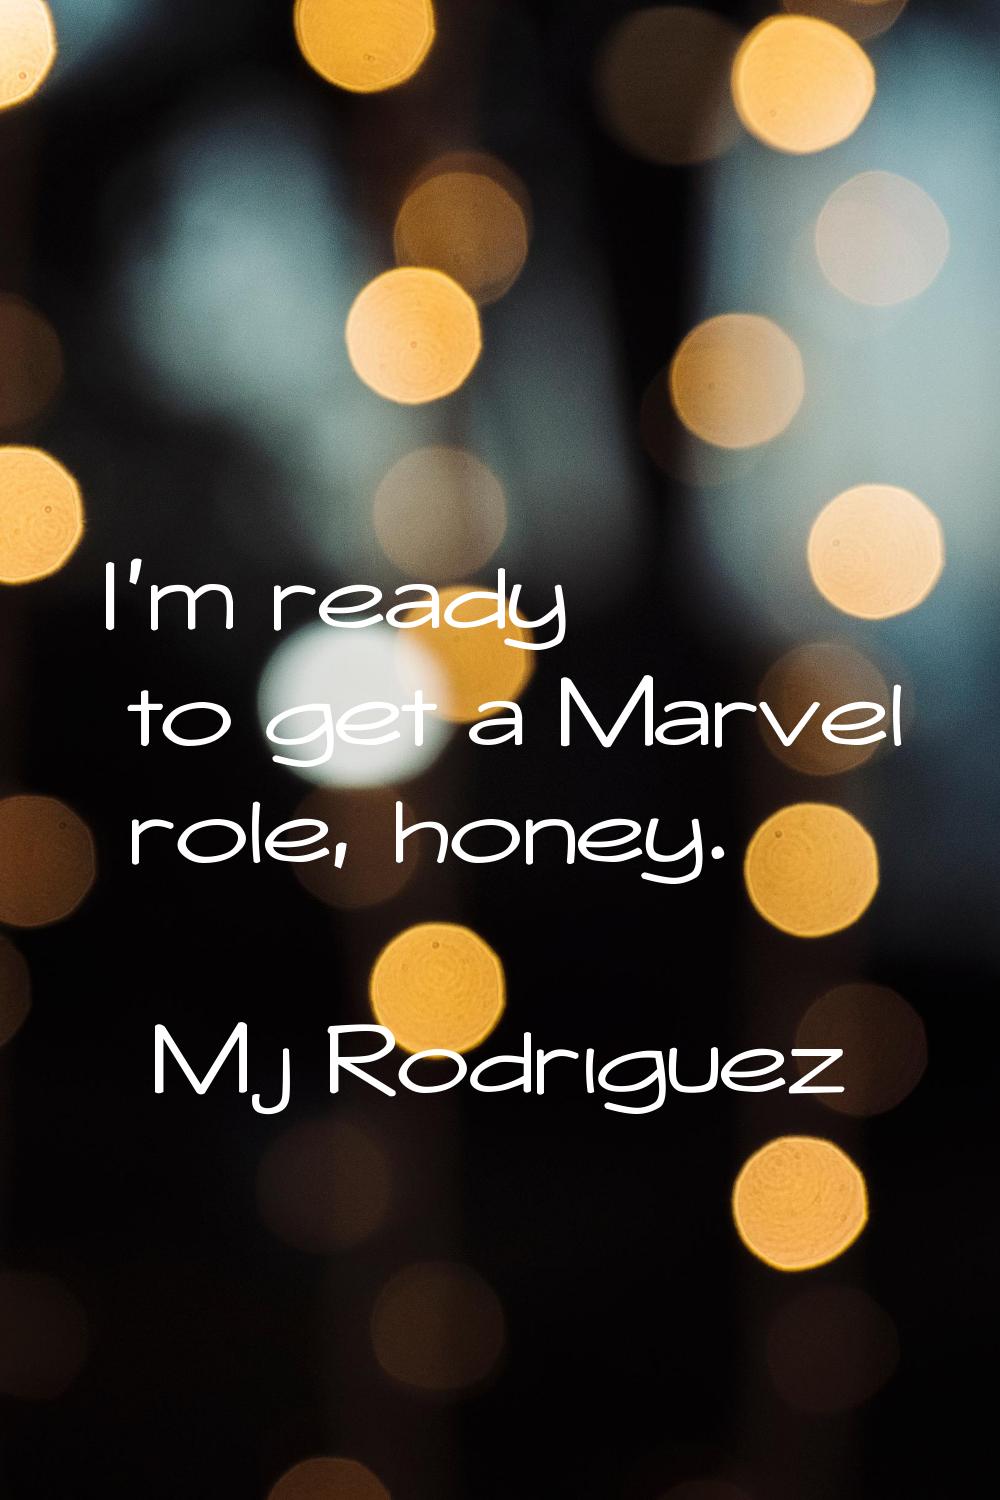 I'm ready to get a Marvel role, honey.